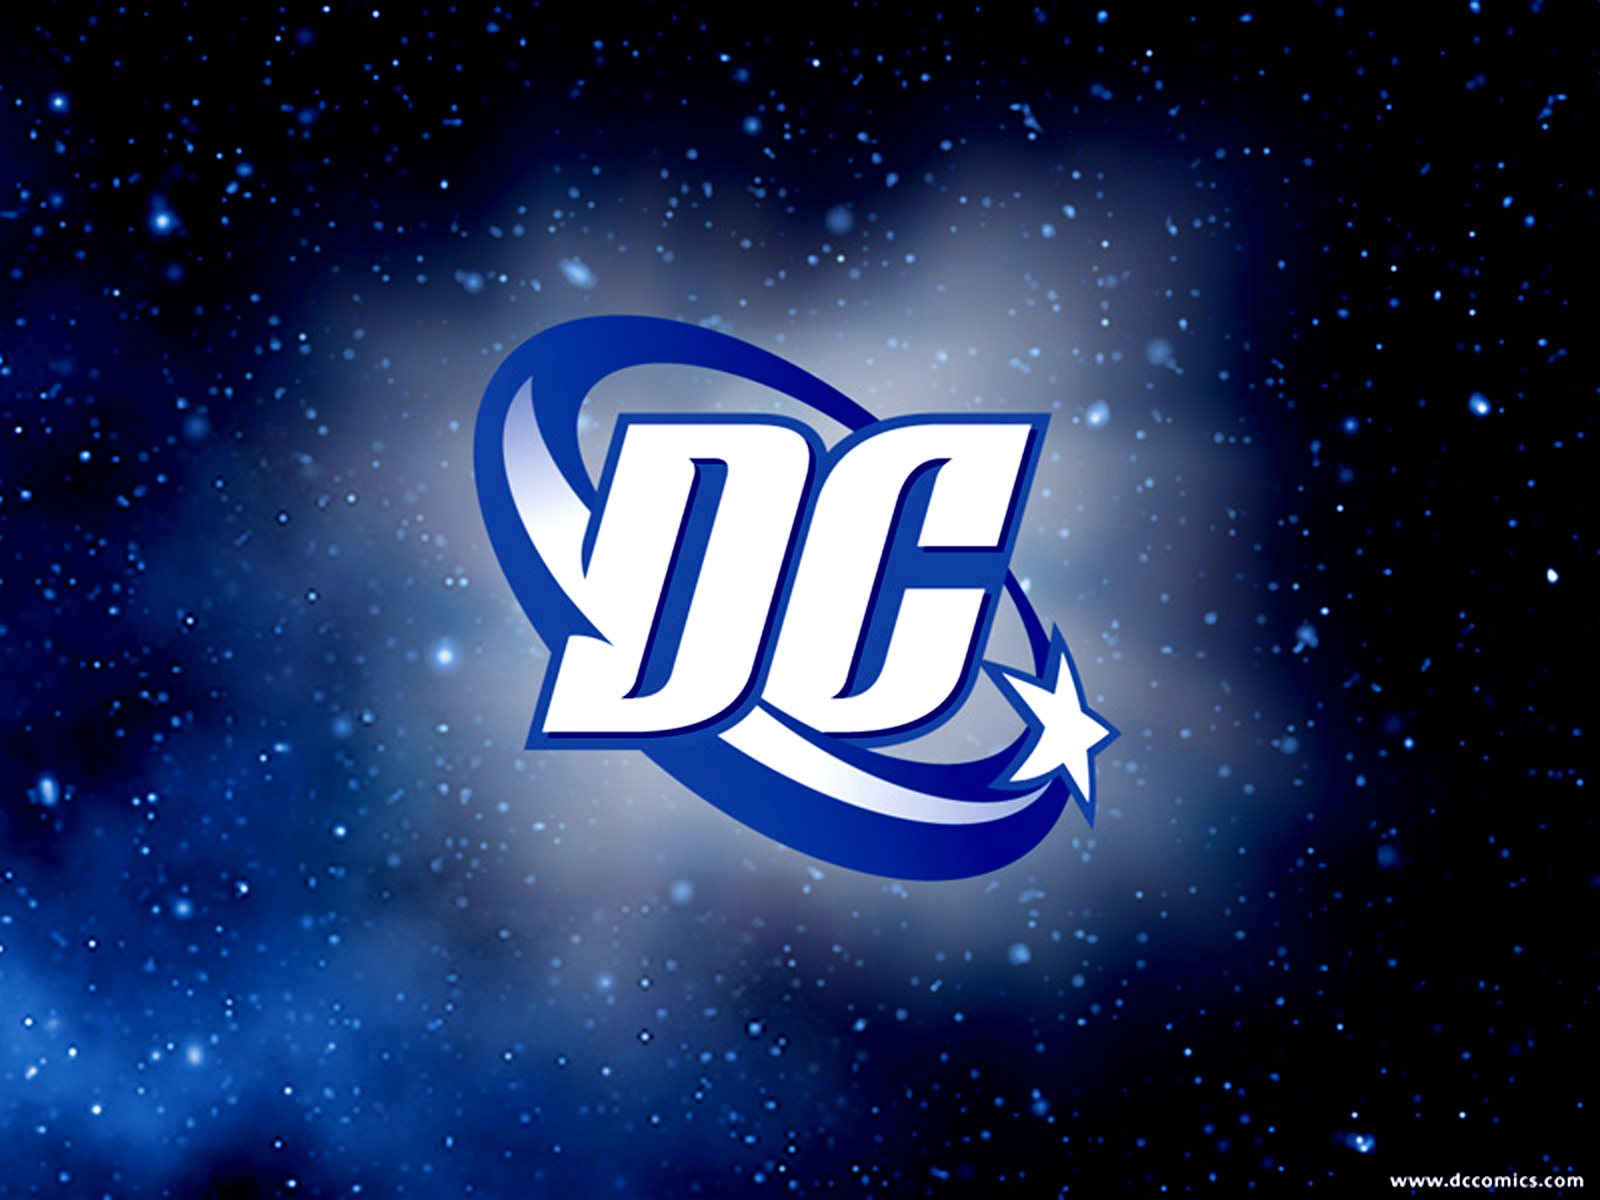 DC Comics Logo by Daniel Beadle on Dribbble